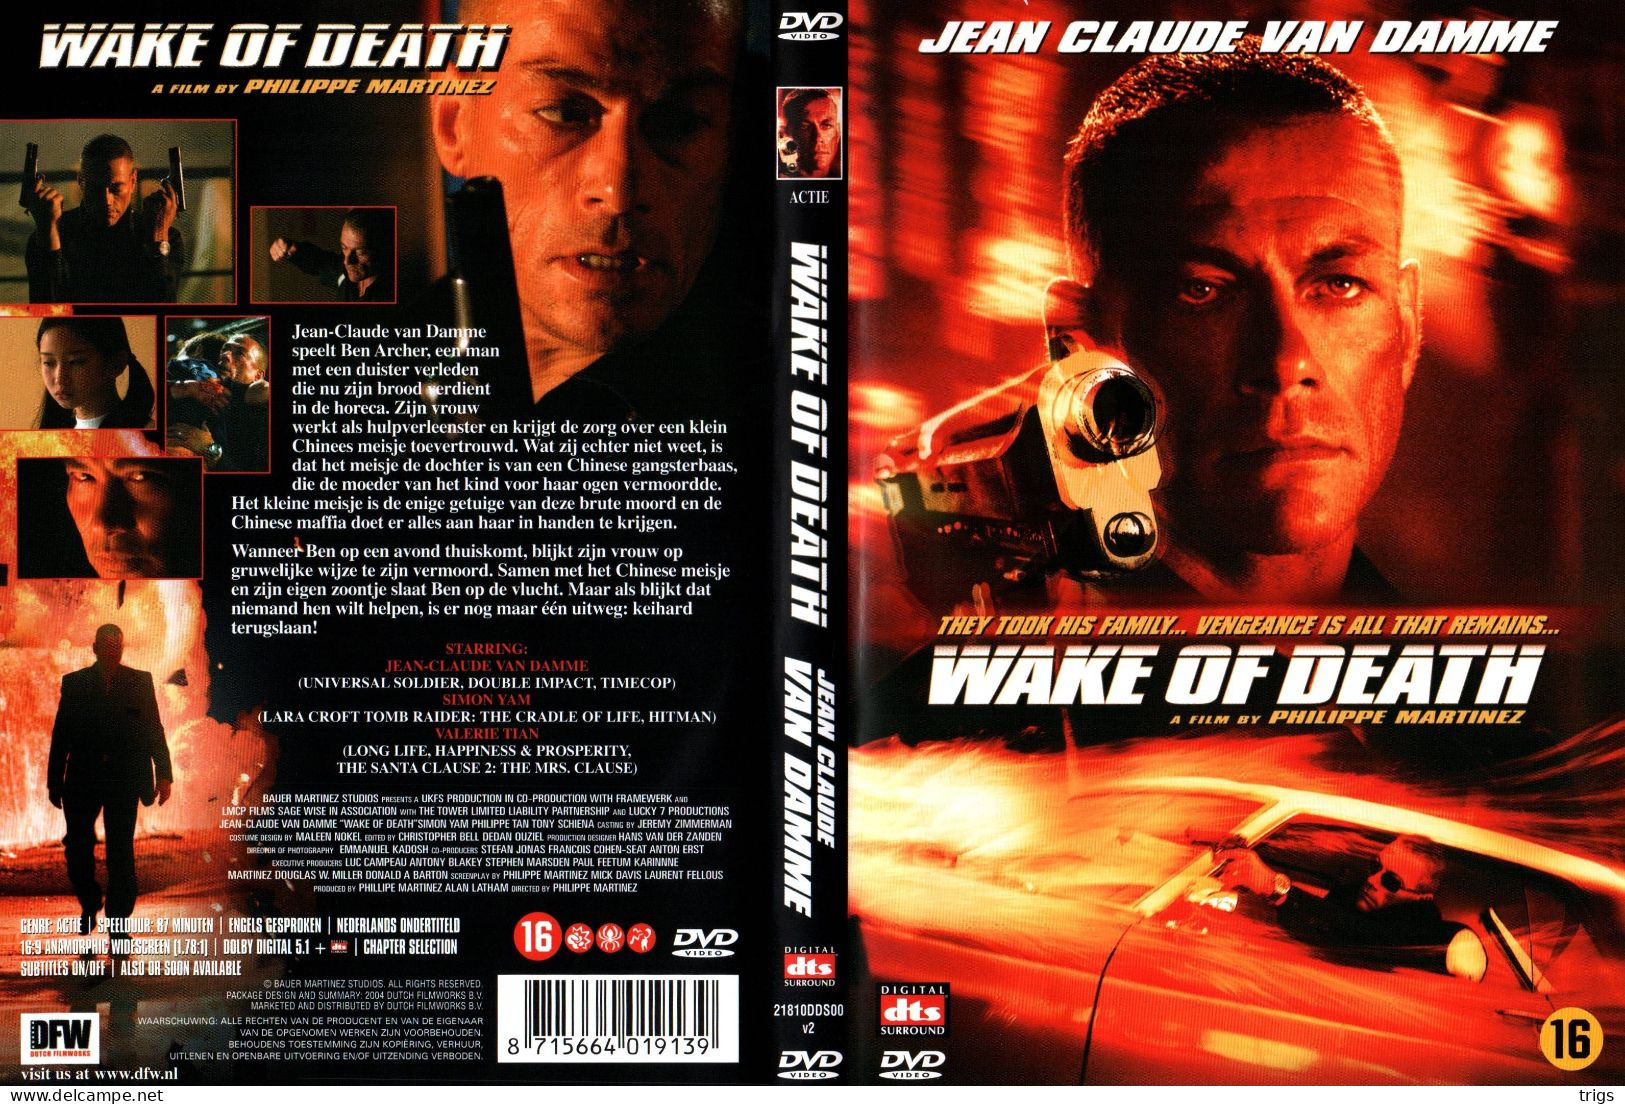 DVD - Wake Of Death - Action, Adventure